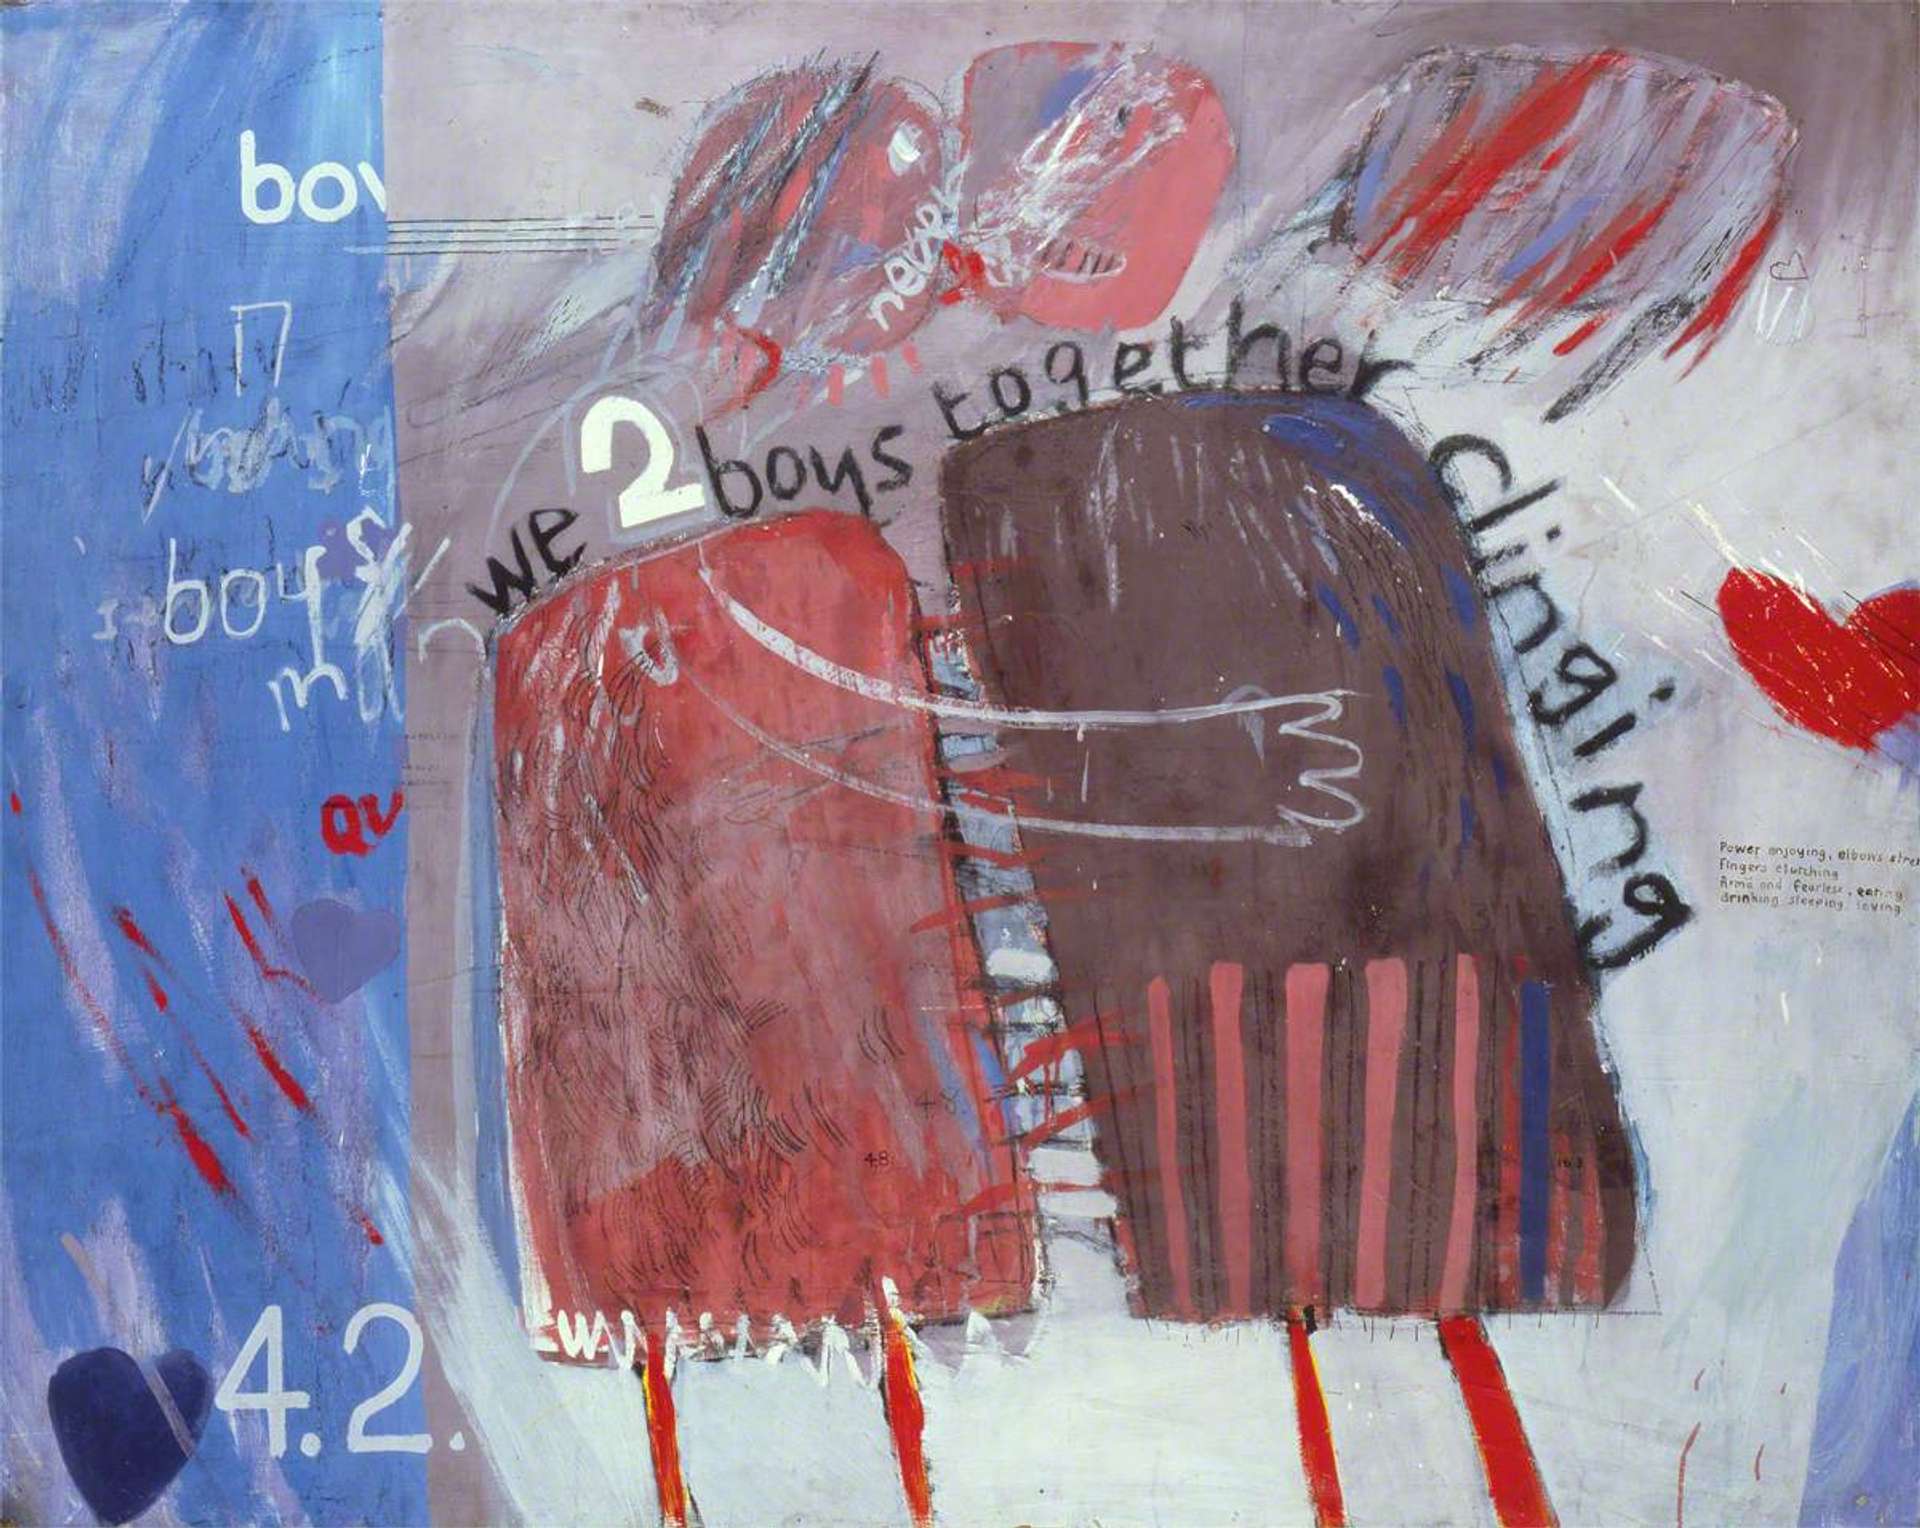 We Two Boys Together Clinging by David Hockney 